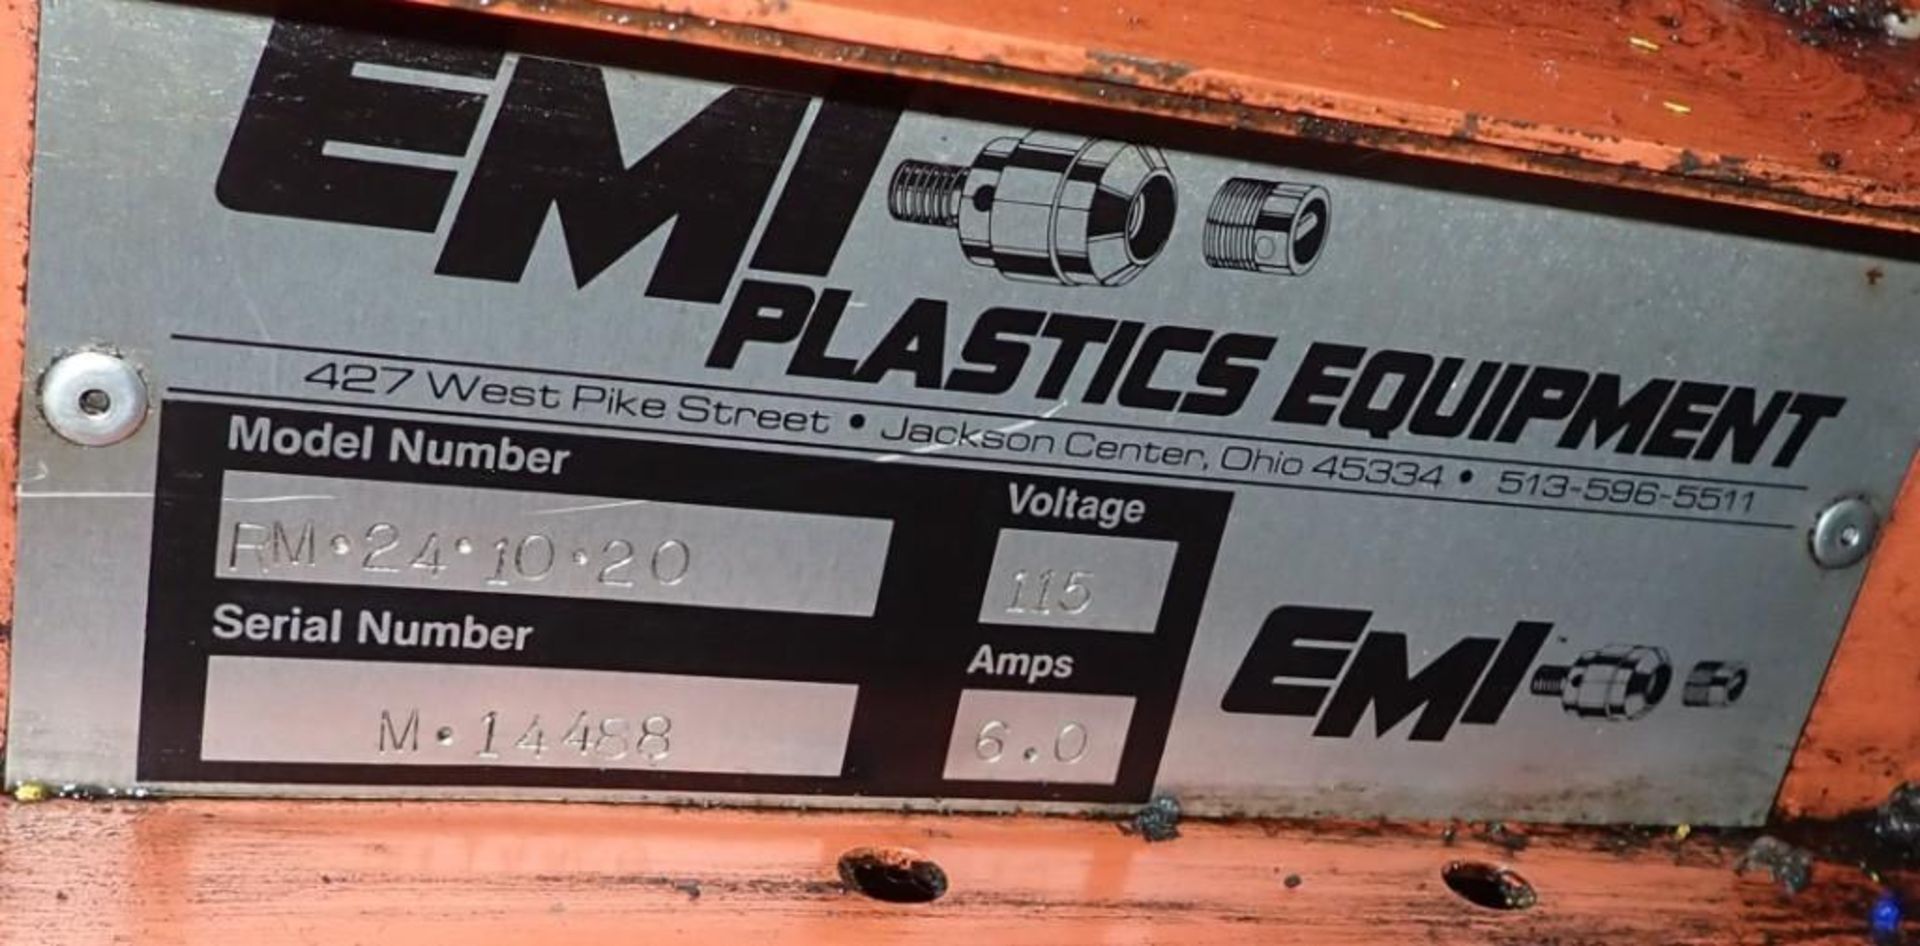 EMI Plastics Equipment #RM-24-10-20 Belt Conveyor - Image 4 of 4